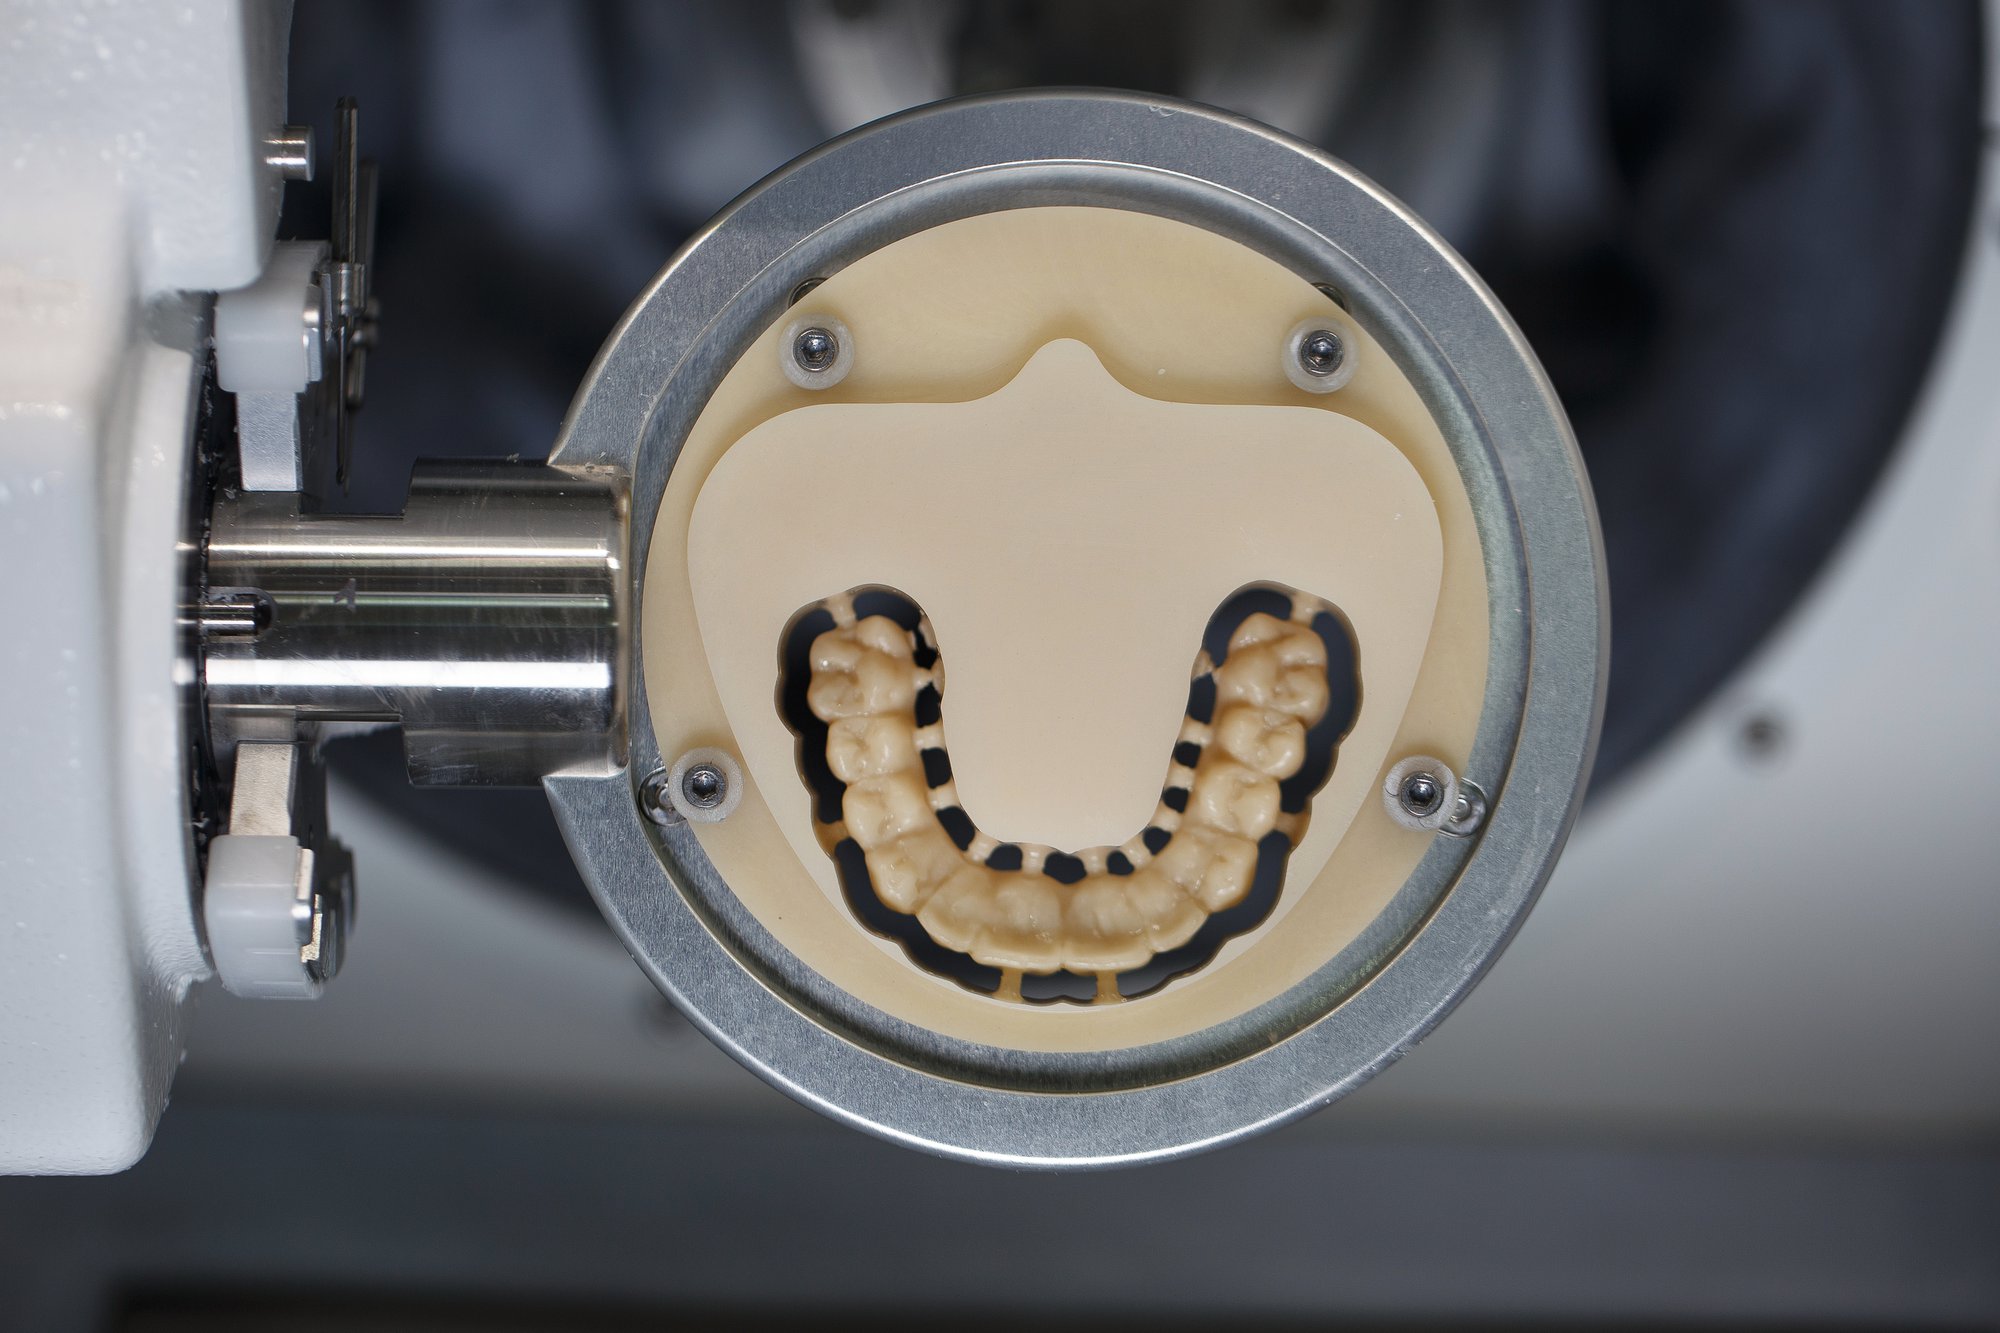 Digital Dentures: The Future of Denture Technology